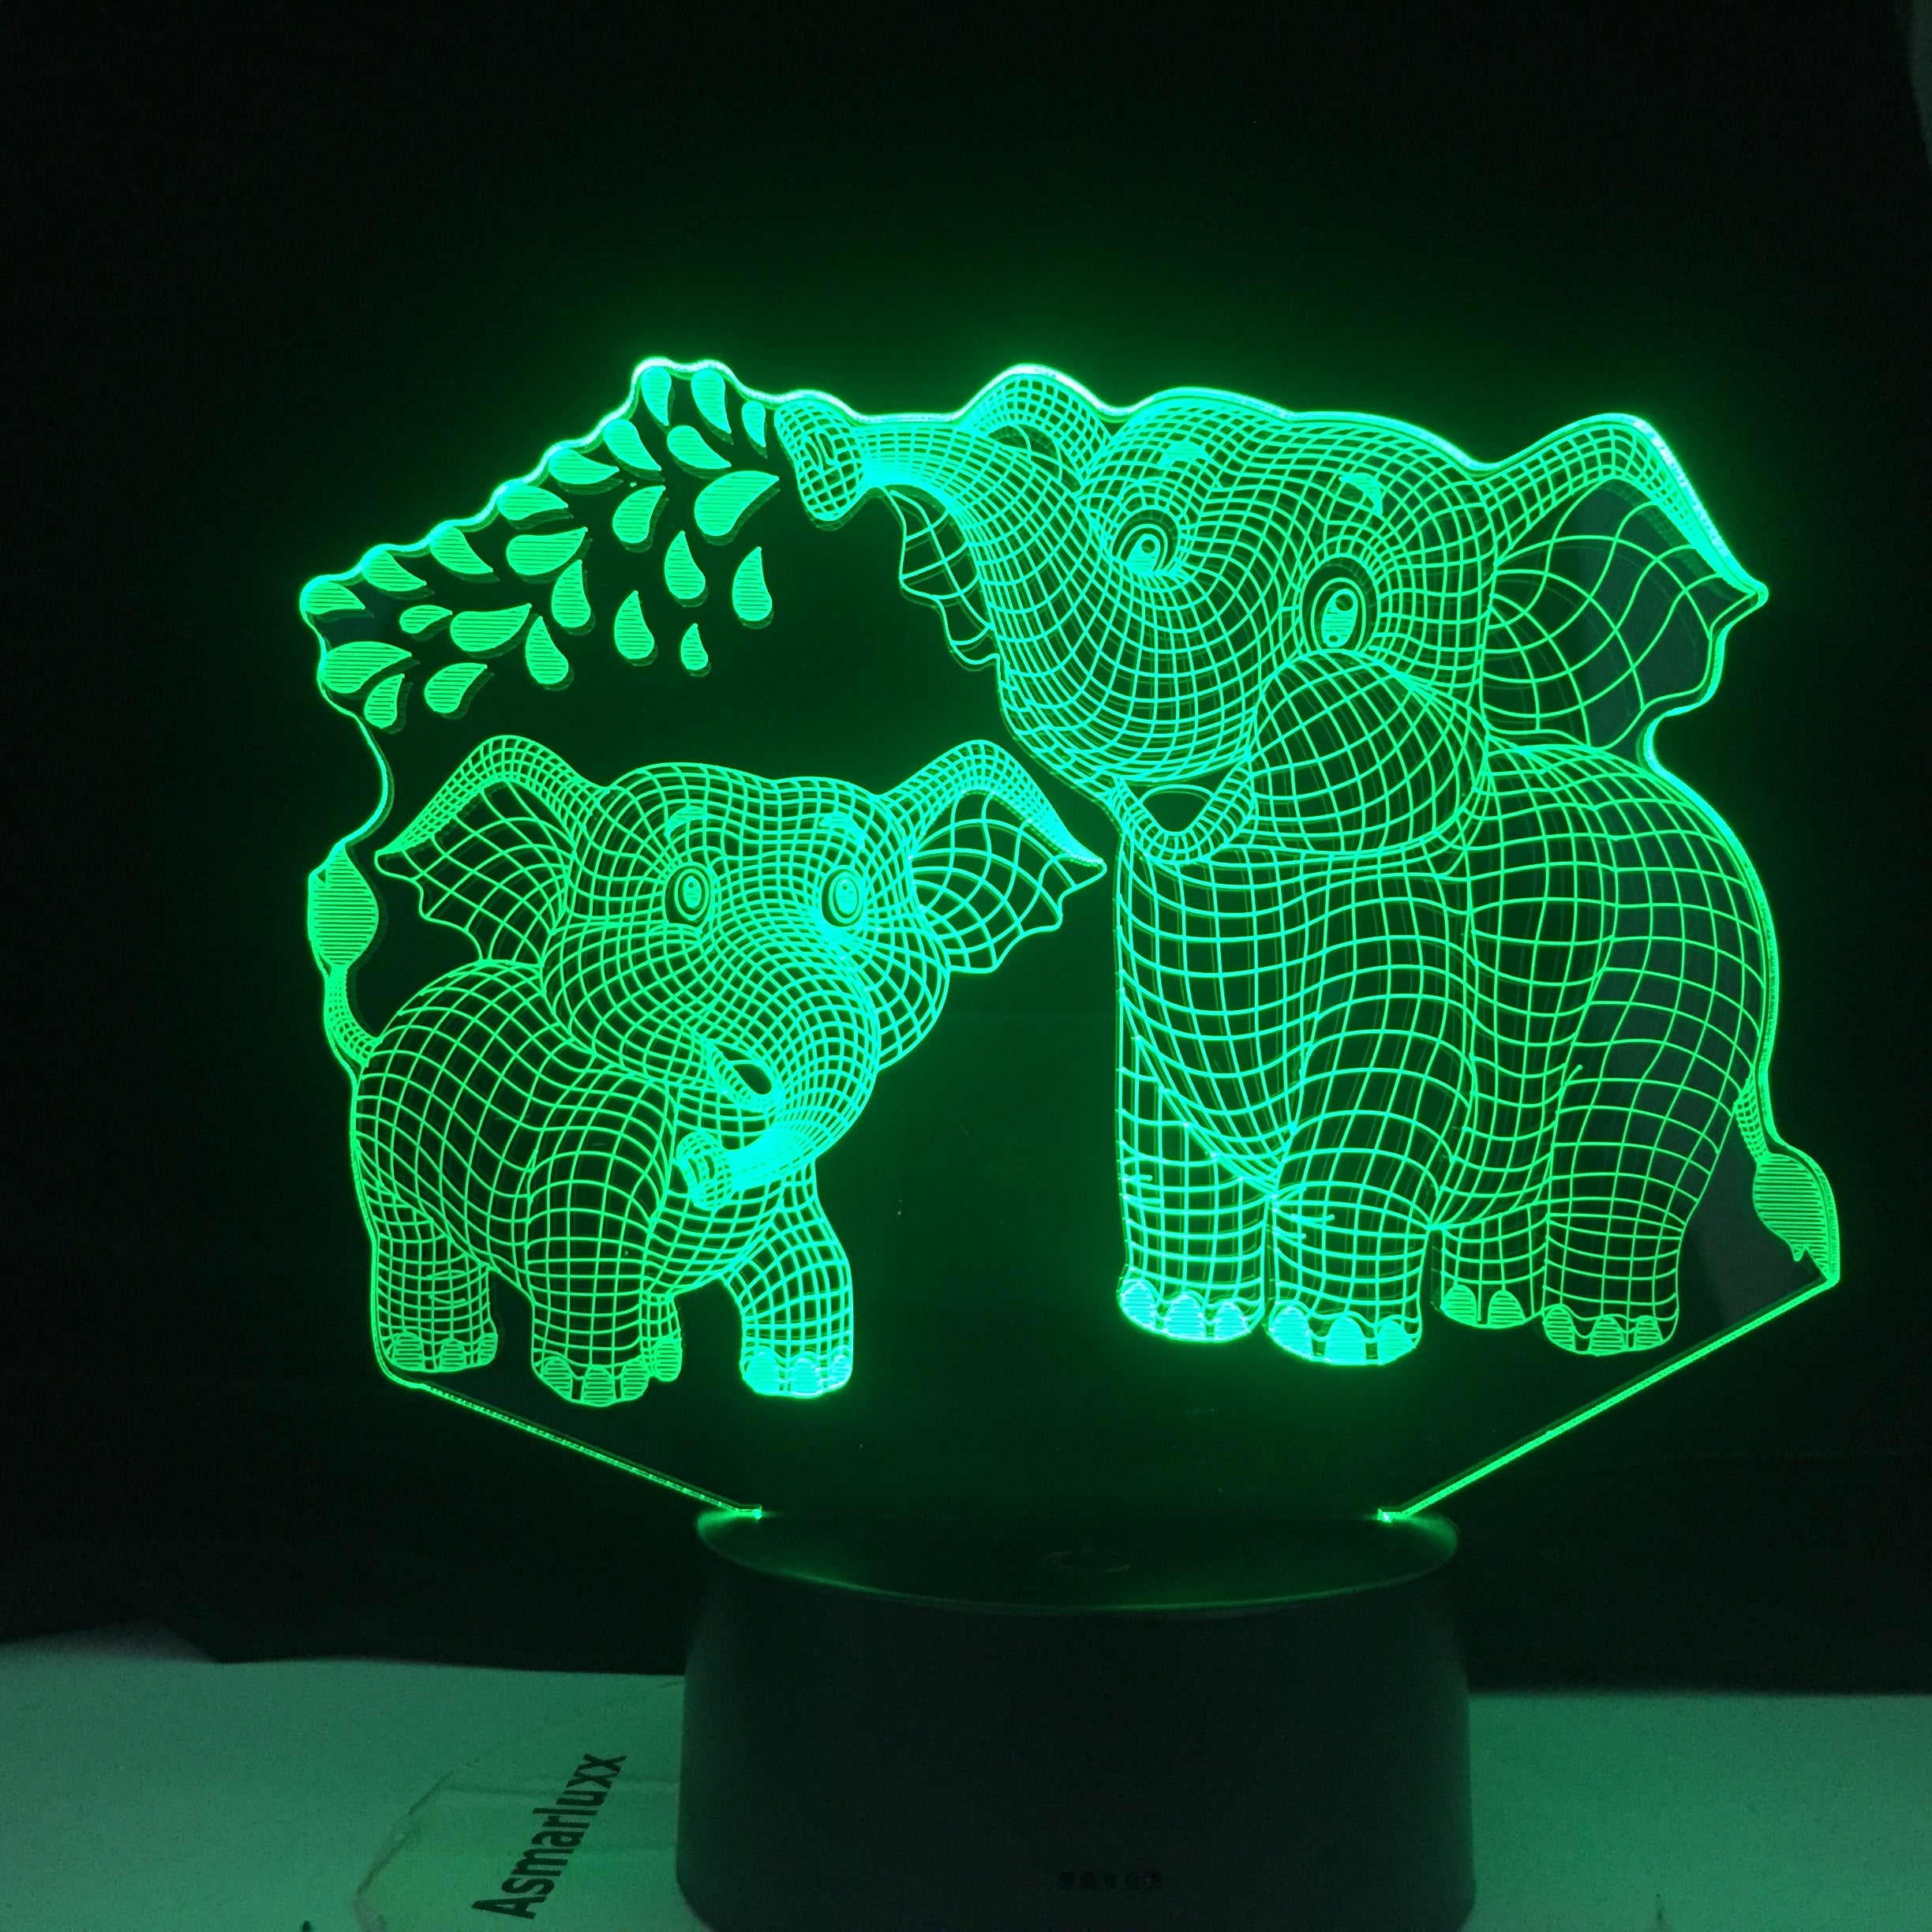 Touch Led Lamp 3D Night Light Elephant Series 7/16 Colors Change LED Table Desk Lamp Kids Christma Gift Home Decoration D30